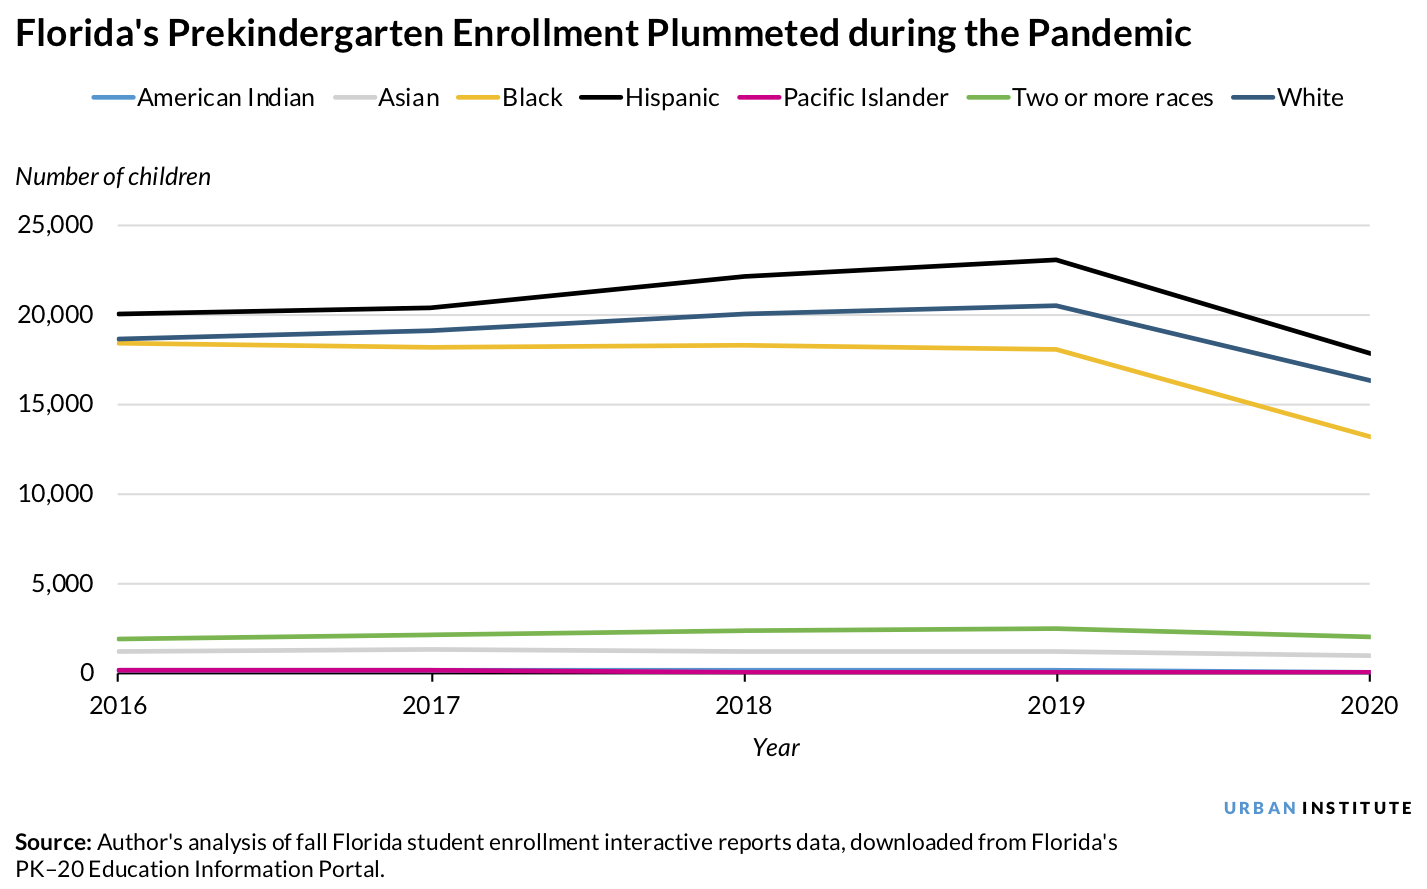 Line chart showing Florida's prekindergarten enrollment plummeted during the pandemic